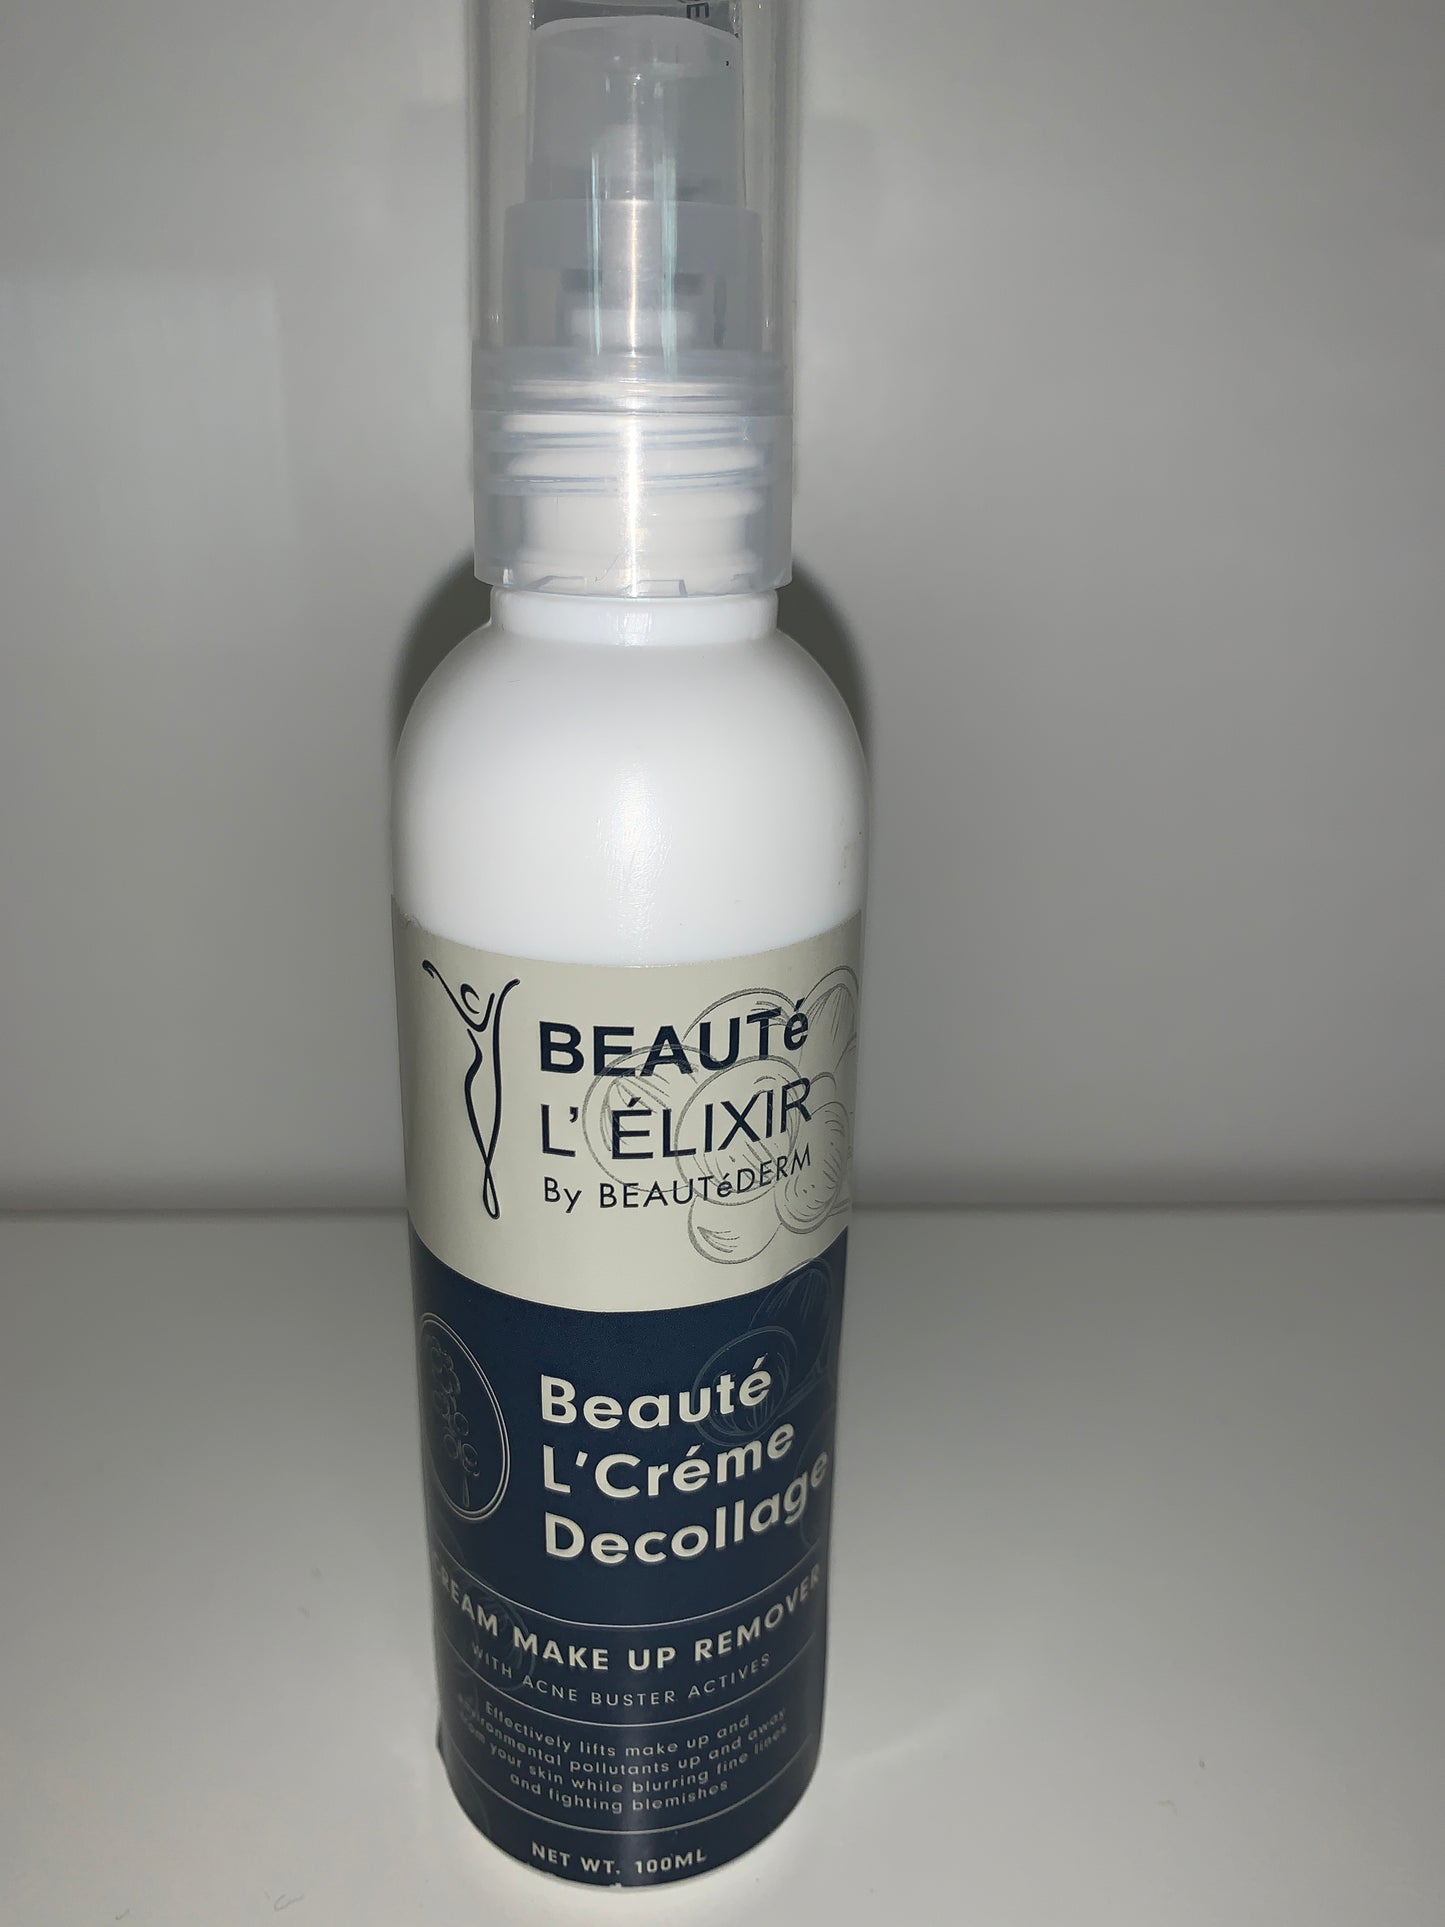 Beauté L’Créme Decollage Cream Make Up Remover  (100ml or 200ml)